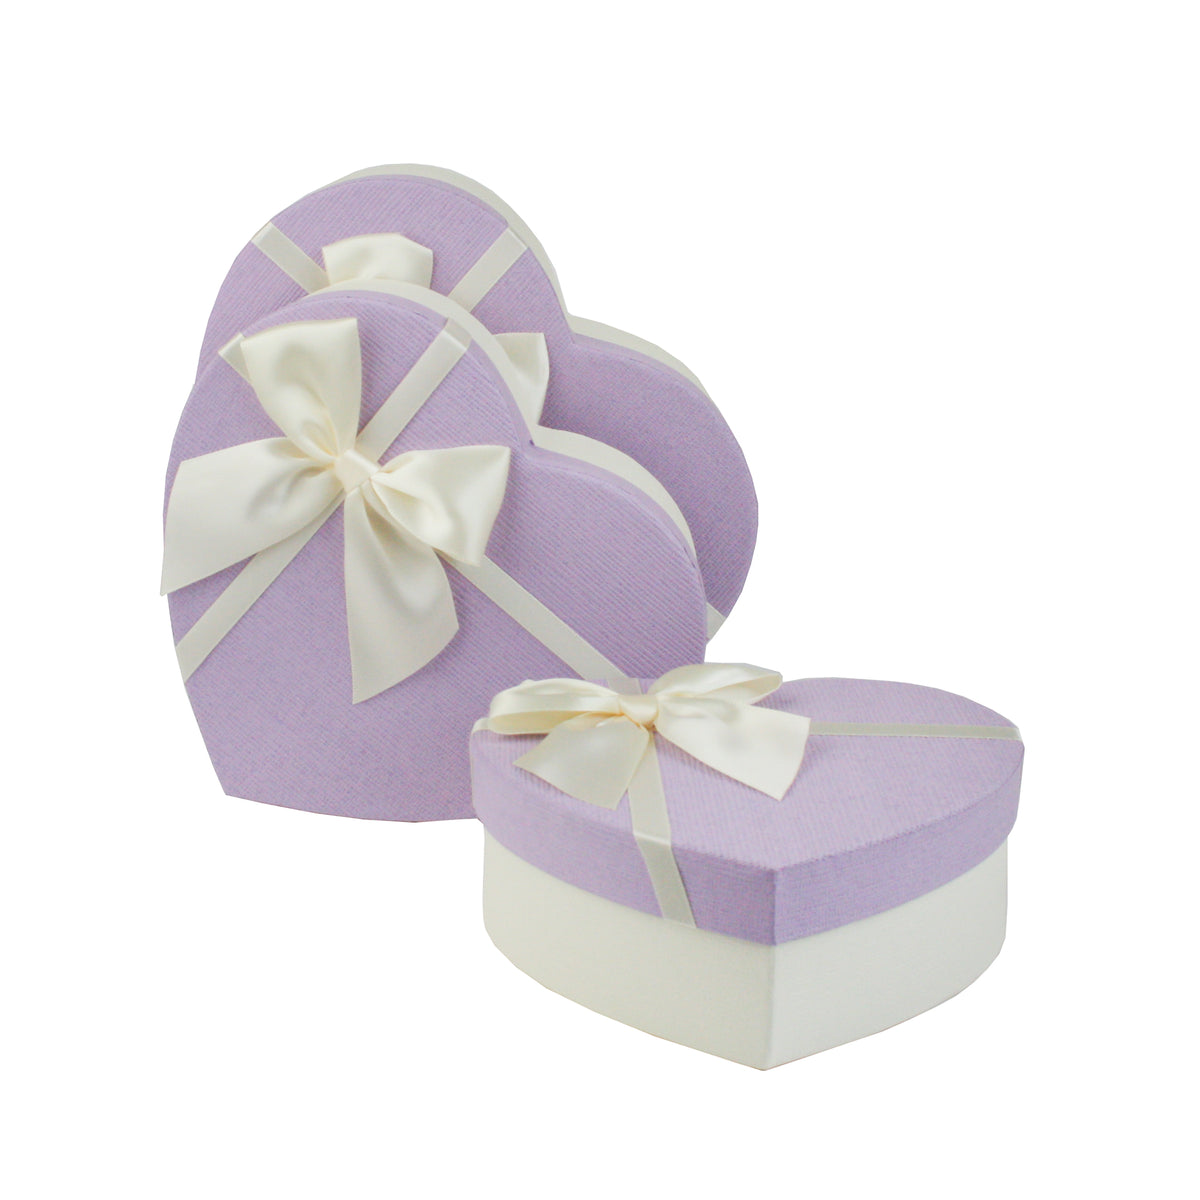 Set of 3 White/Lilac Gift Boxes With White Satin Ribbon